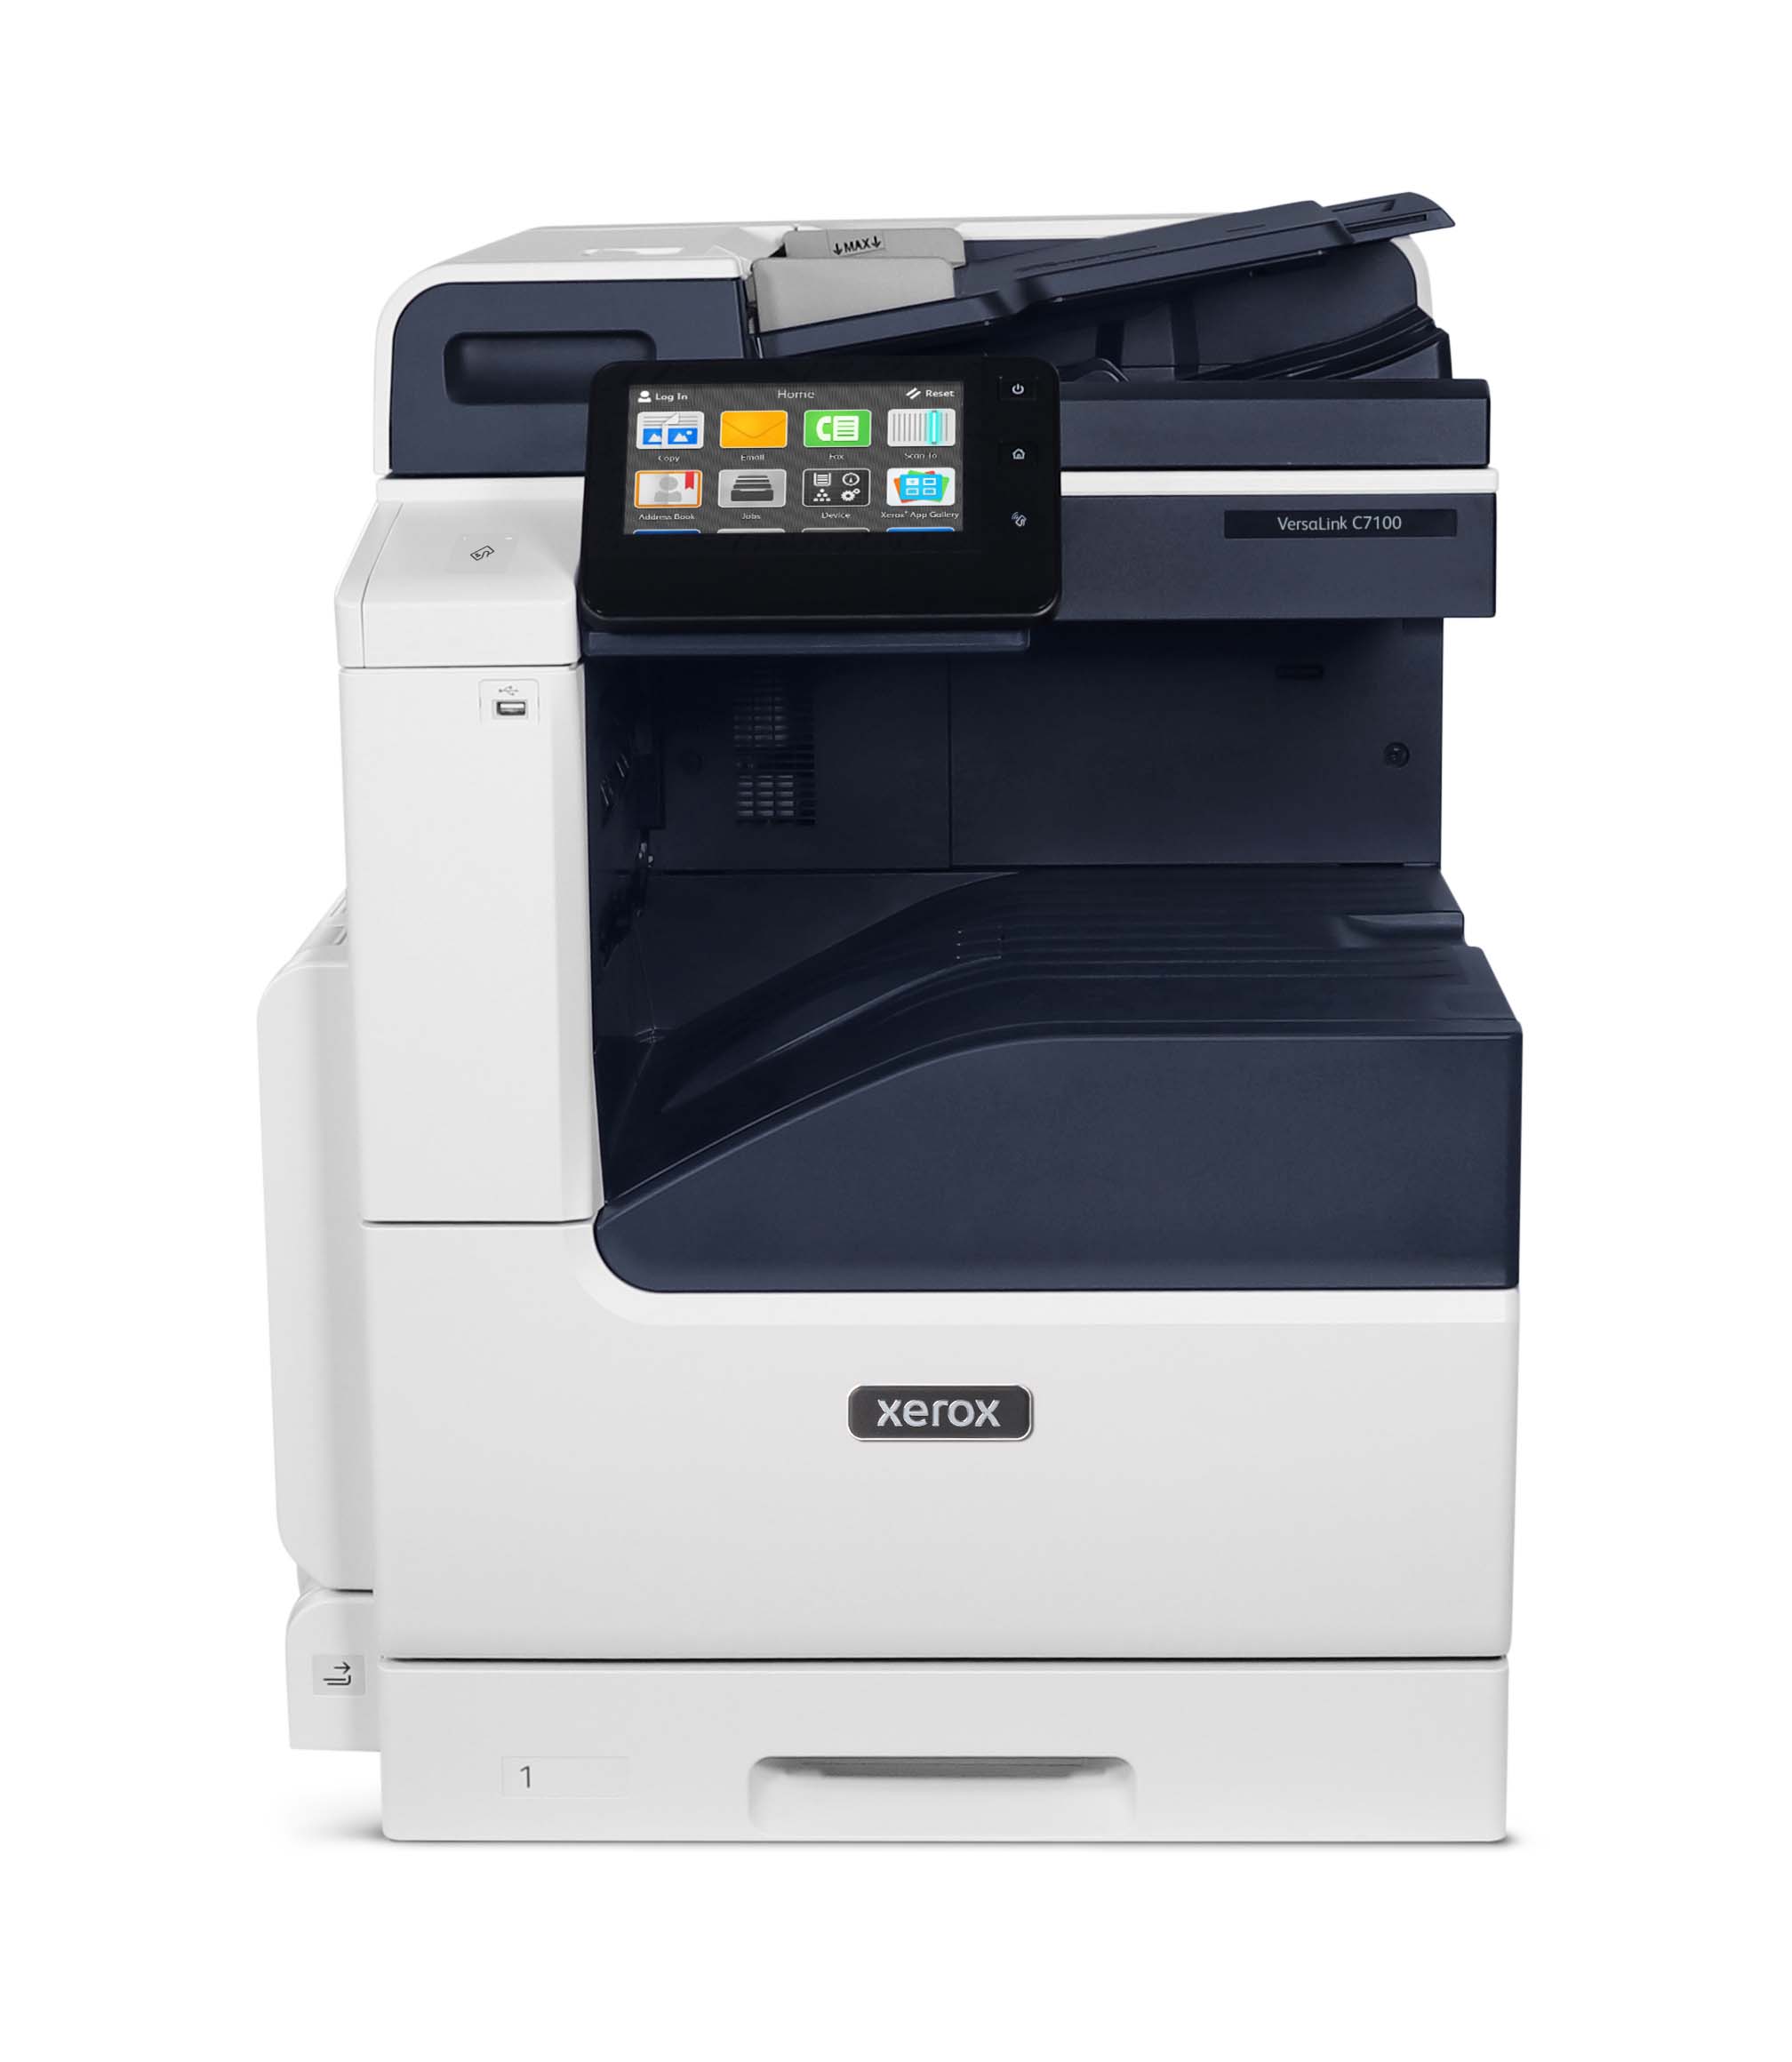 Xerox VersaLink C7120 Colour MultiFunction Printer - Desktop Single tray version